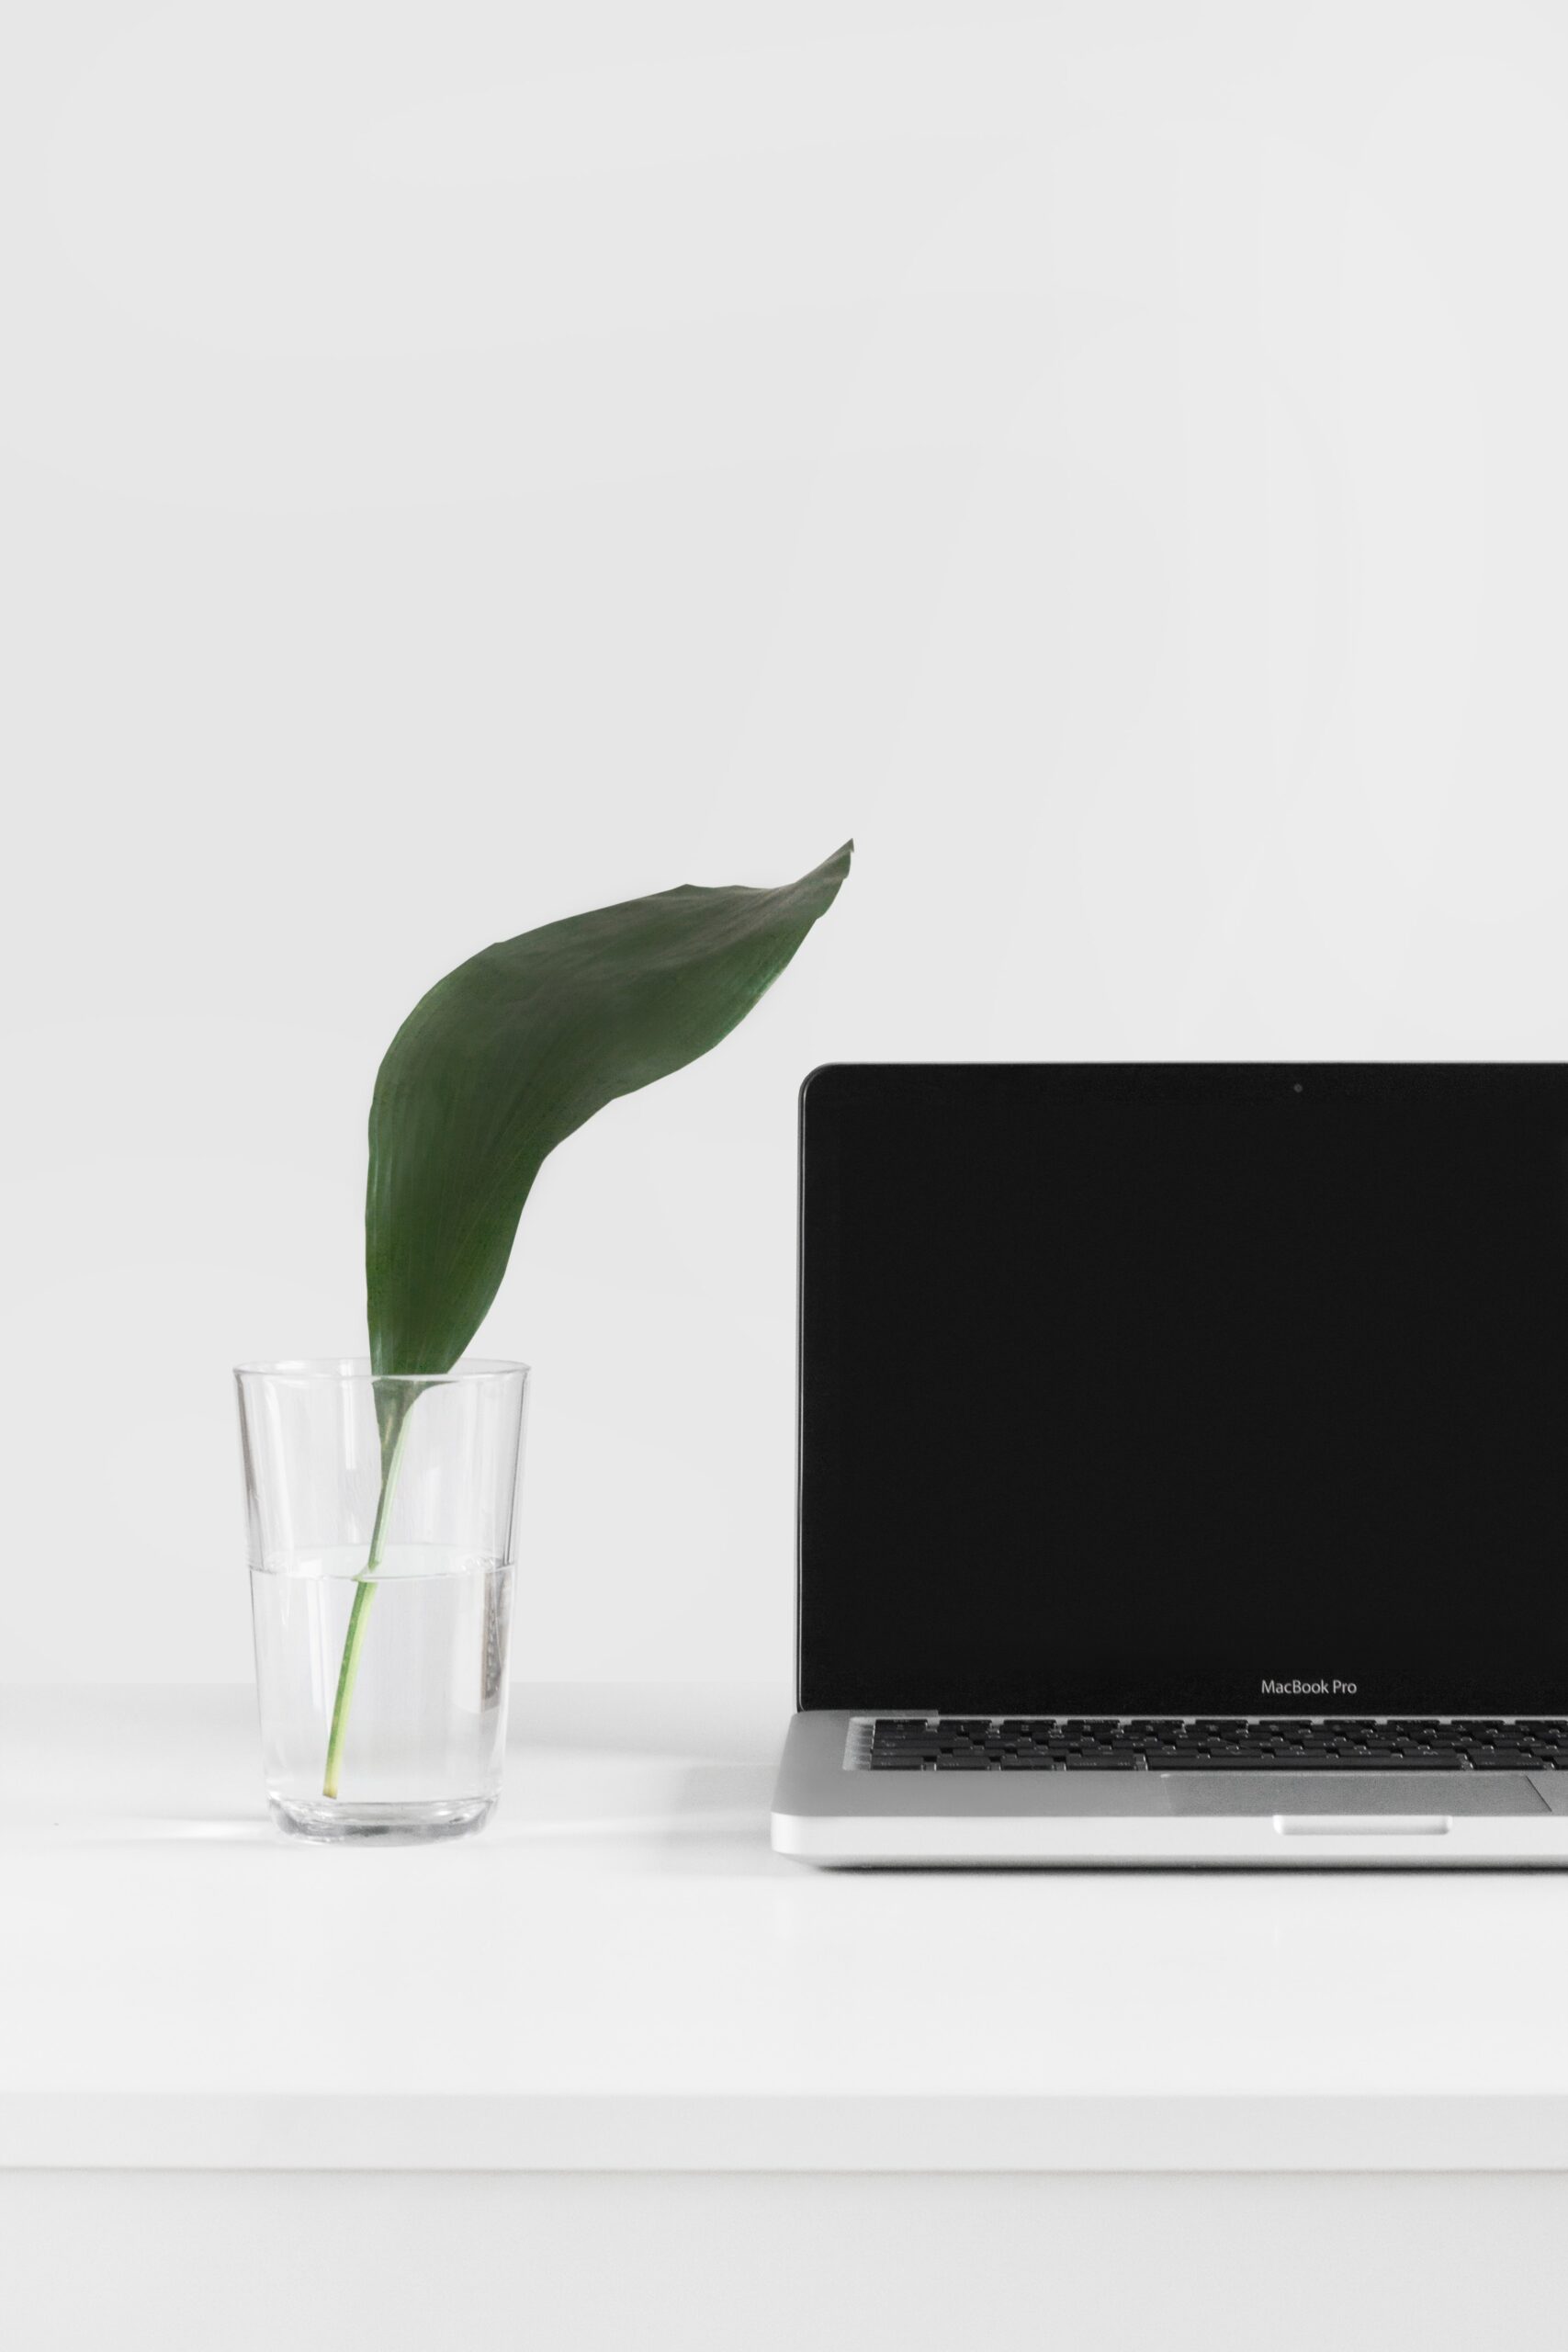 Leaf in vase next to open laptop